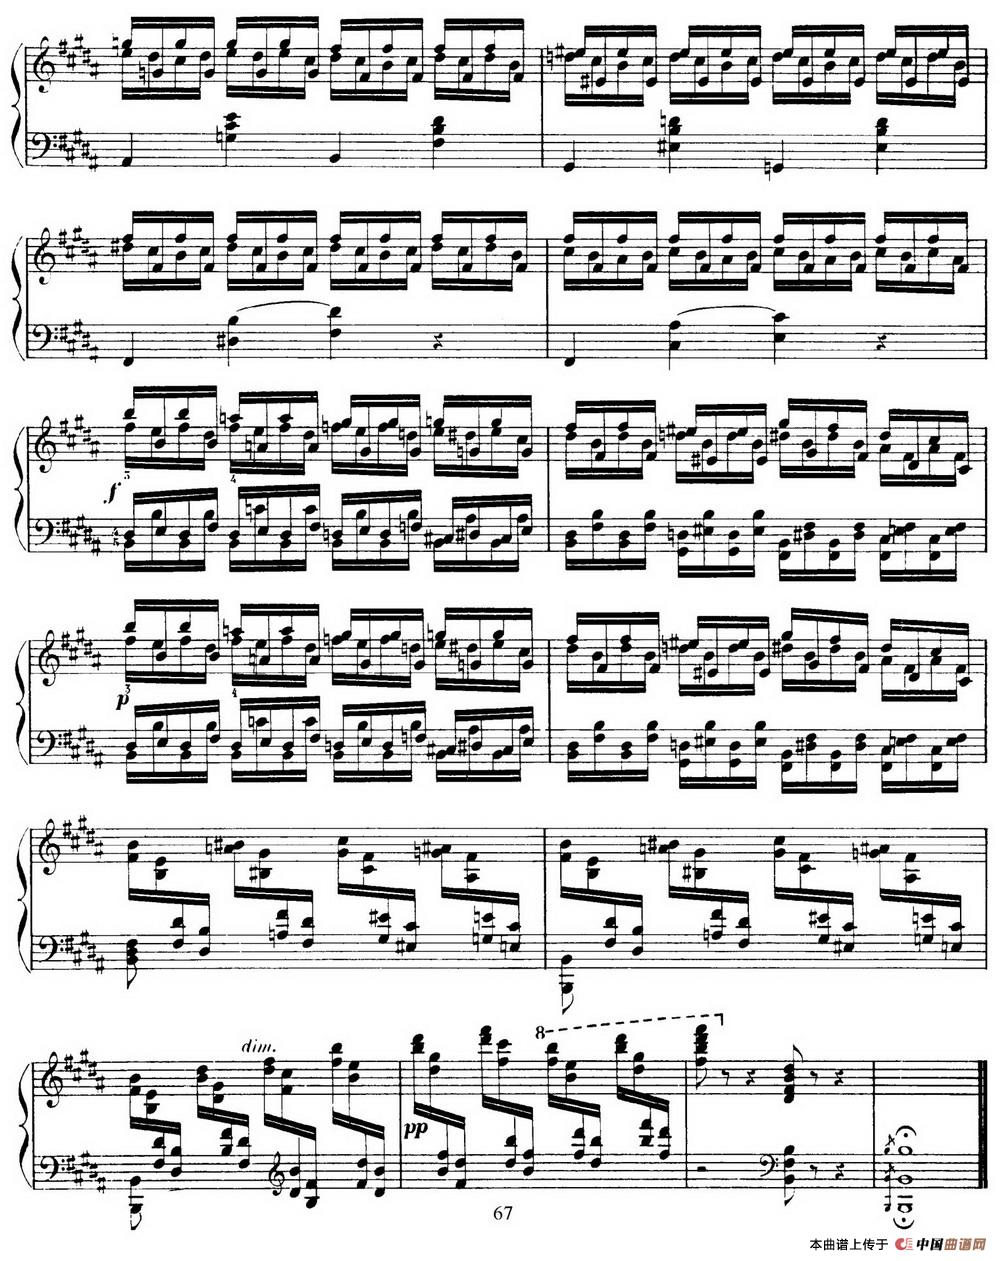 《15 Etudes de Virtuosité Op.72 No.15》钢琴曲谱图分享